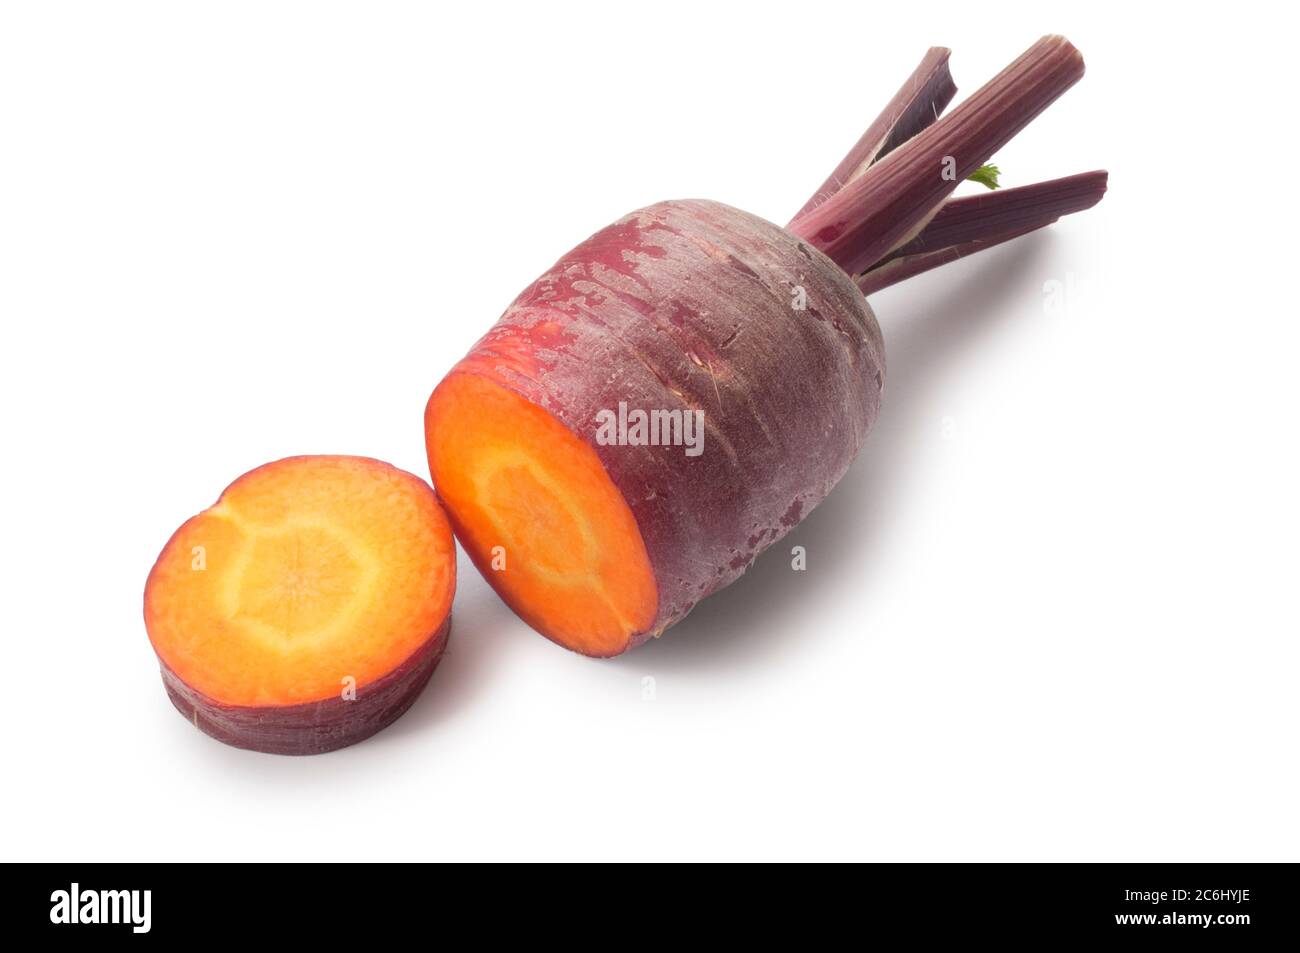 Studio shot of purple carrot cut against a white background - John Gollop Stock Photo